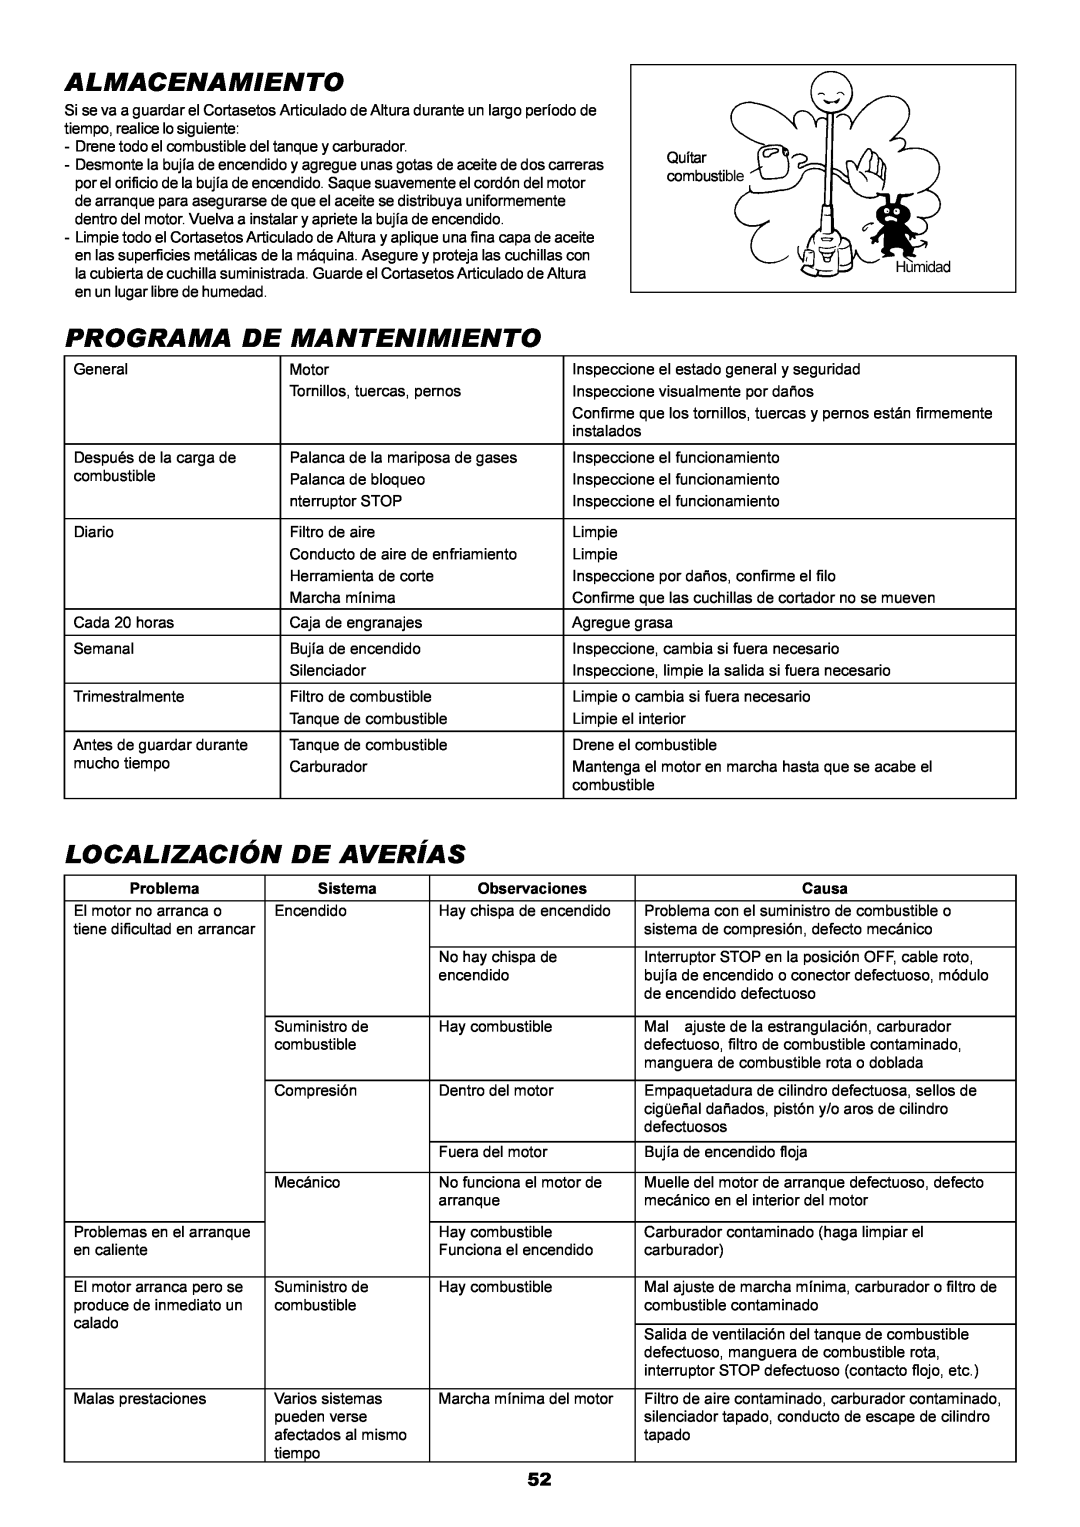 Dolmar MH-2556 instruction manual Almacenamiento, Programa De Mantenimiento, Localización De Averías 